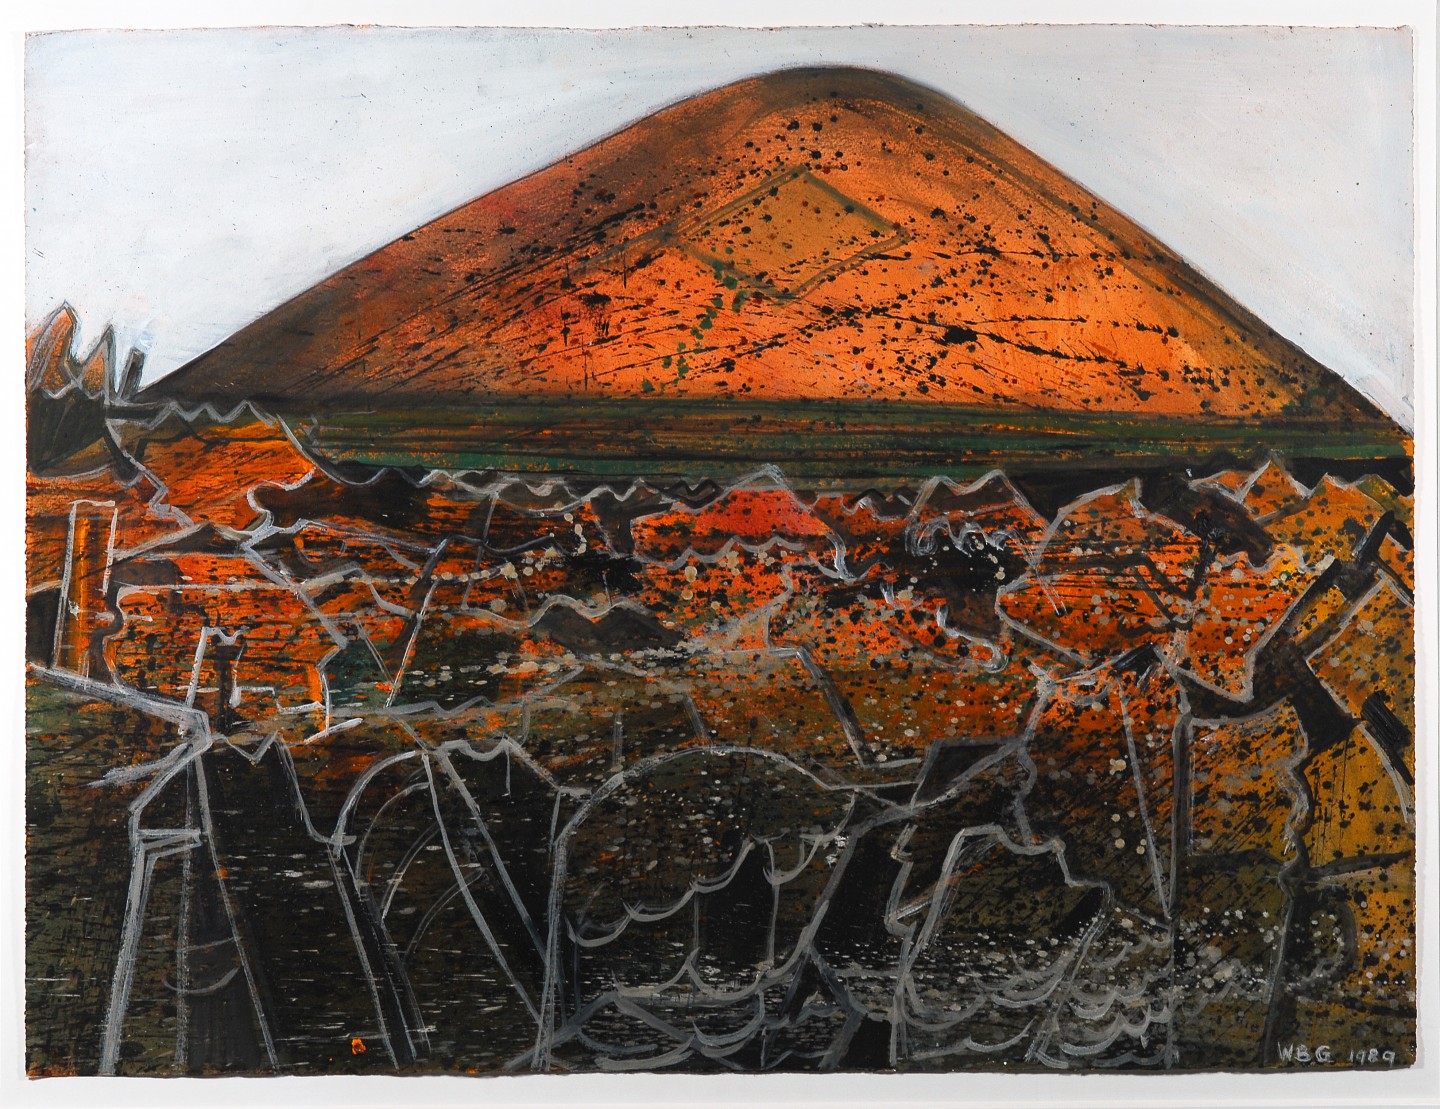 Volcanic Island Lanzarote near La Geria 2, 1989, acrylic on paper